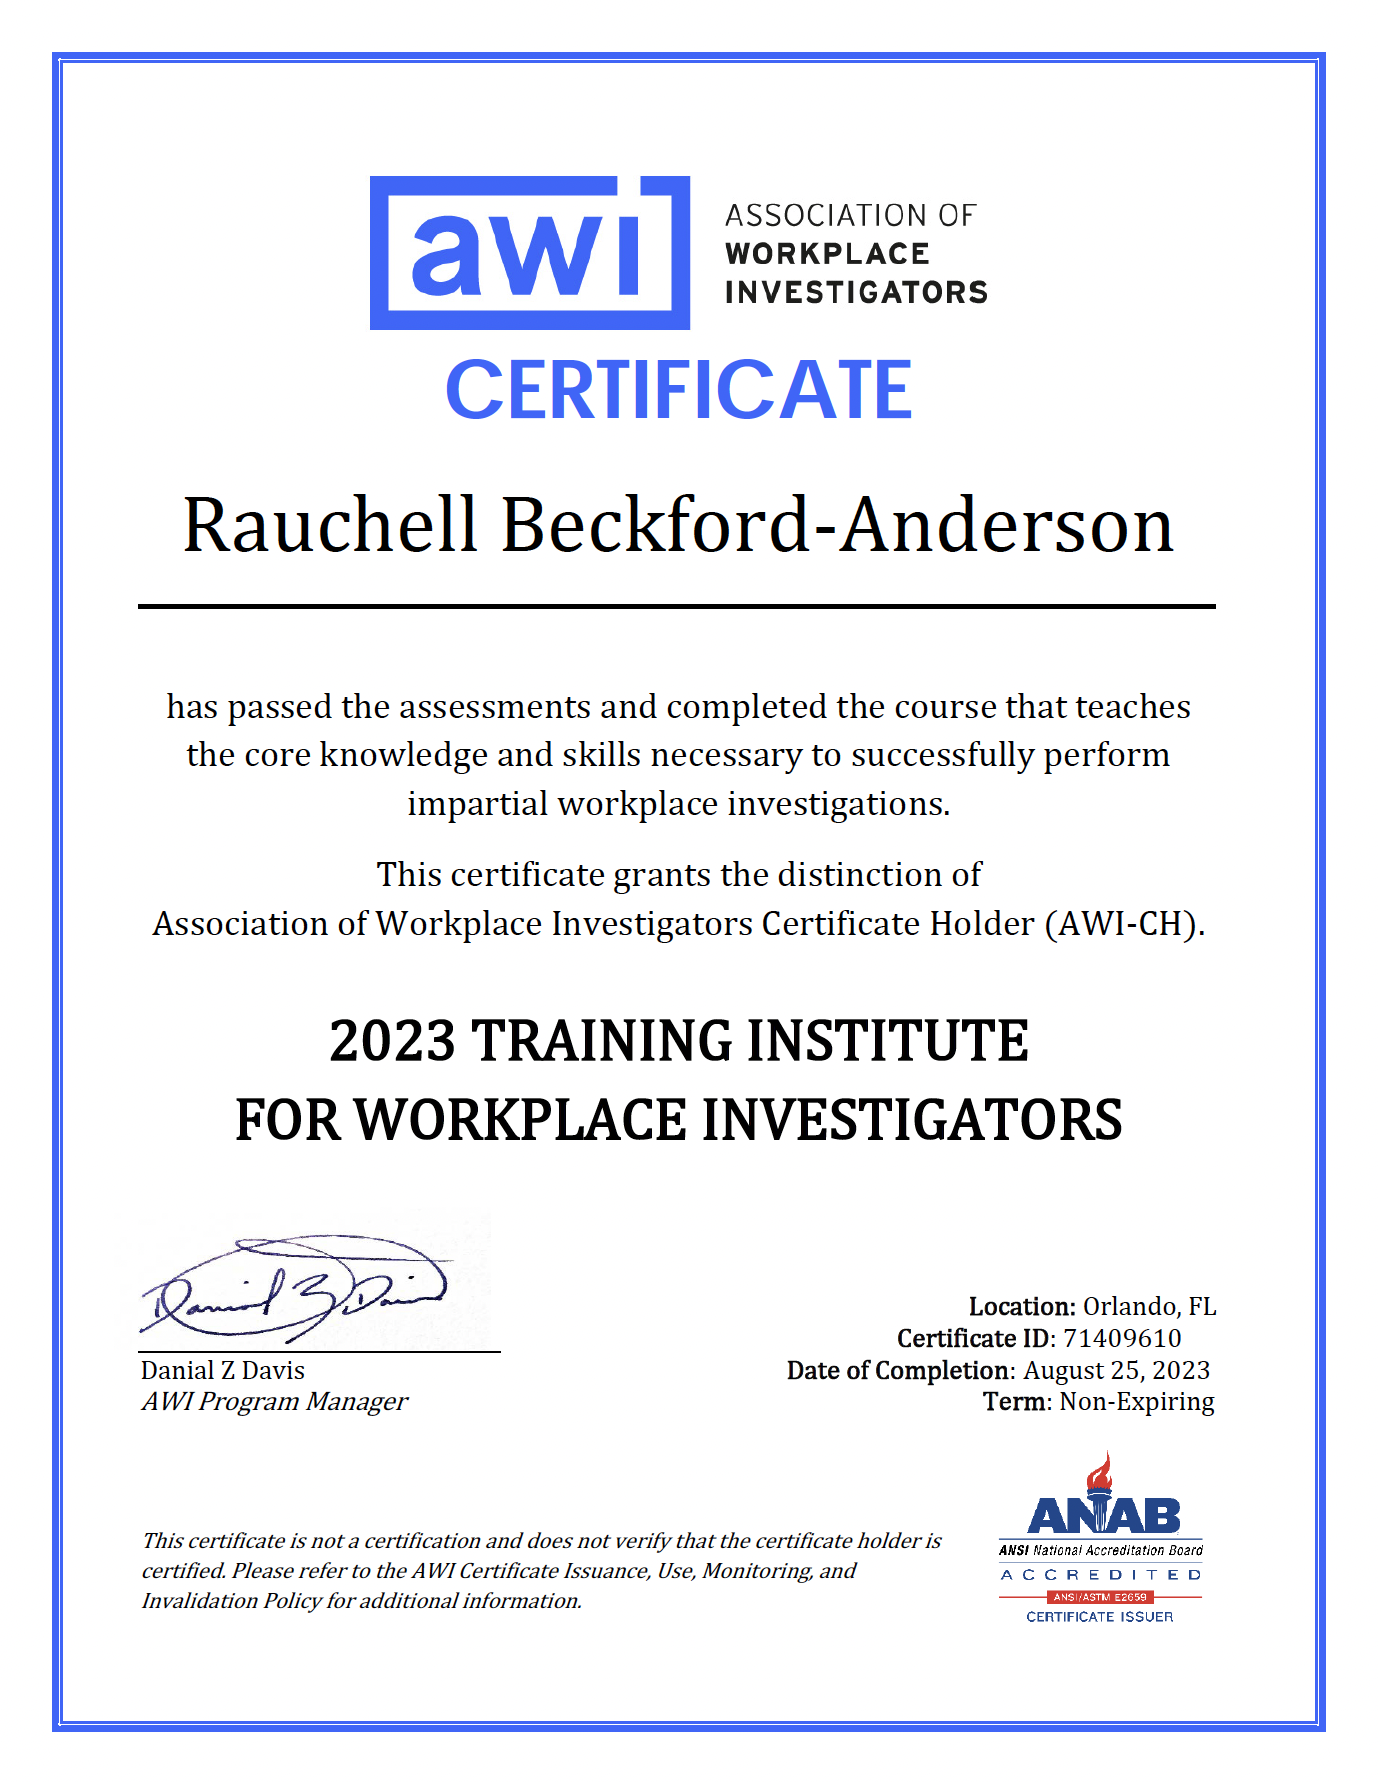 Association of Workplace Investigators Certificate of Training